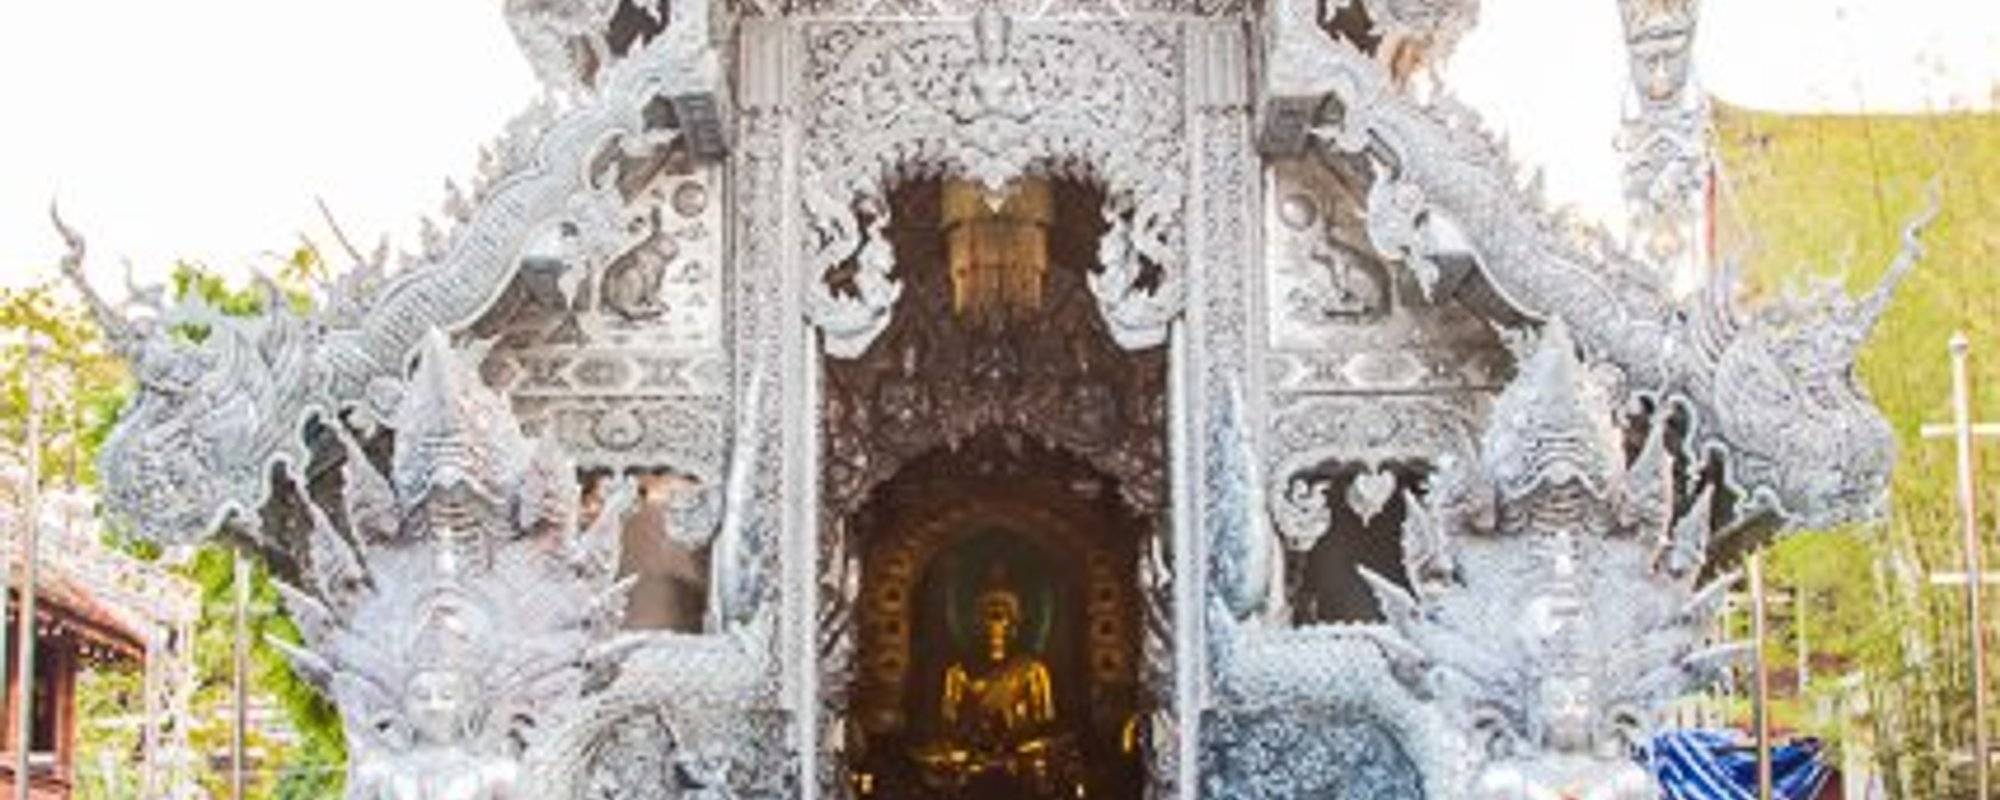 Chiang Mai's silver temple, Wat Sri Suphan